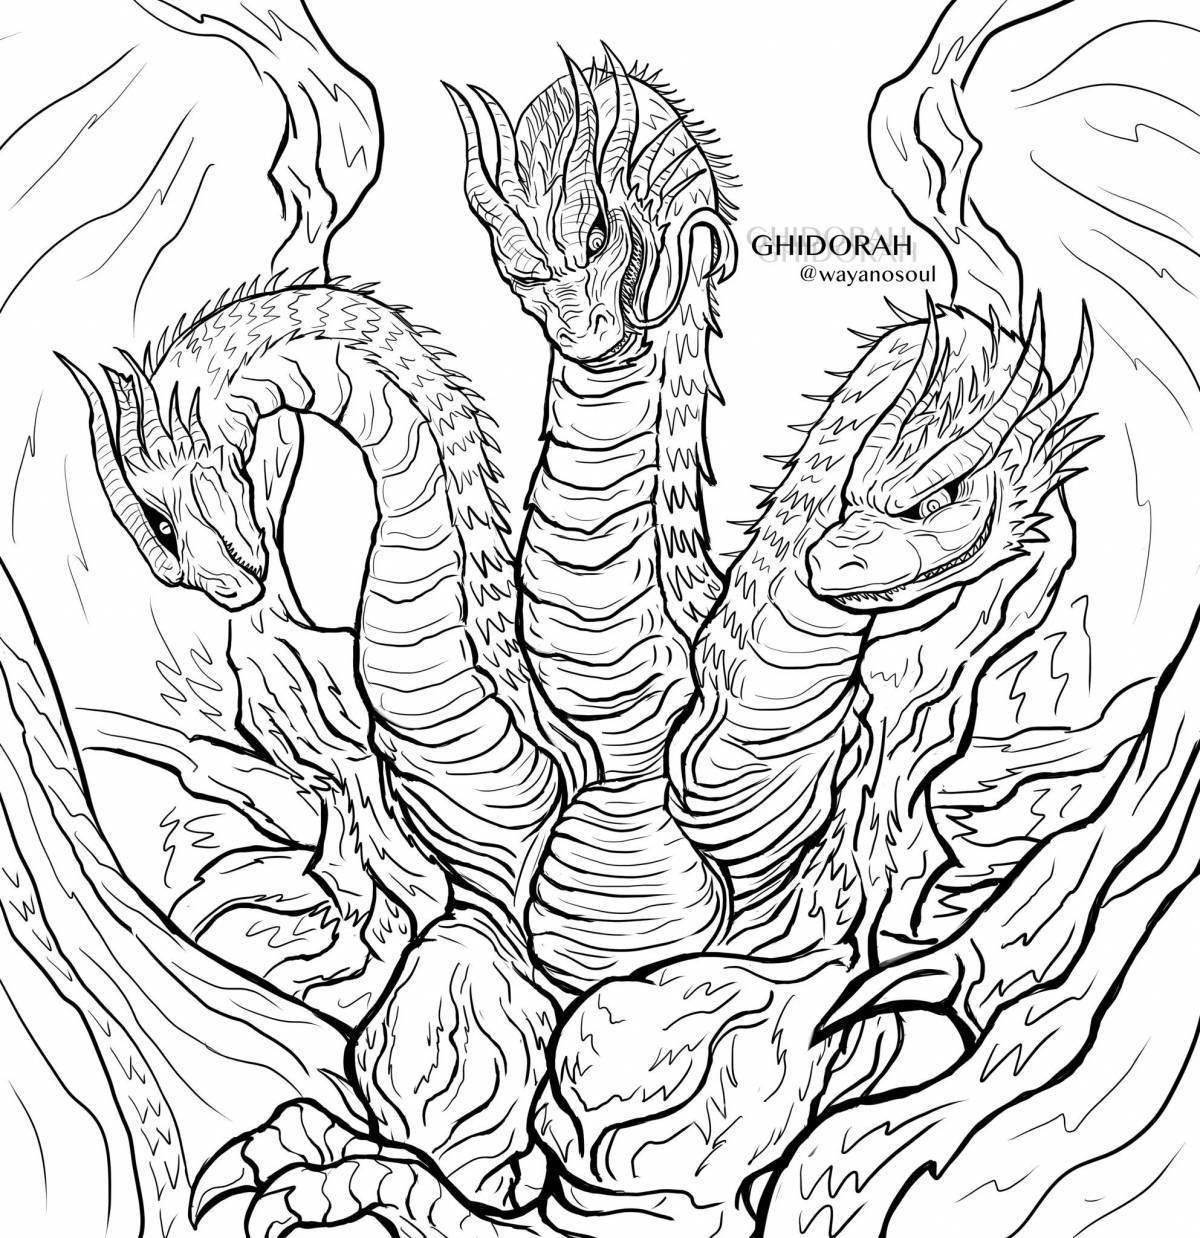 Awesome Godzilla and Kingidora coloring book